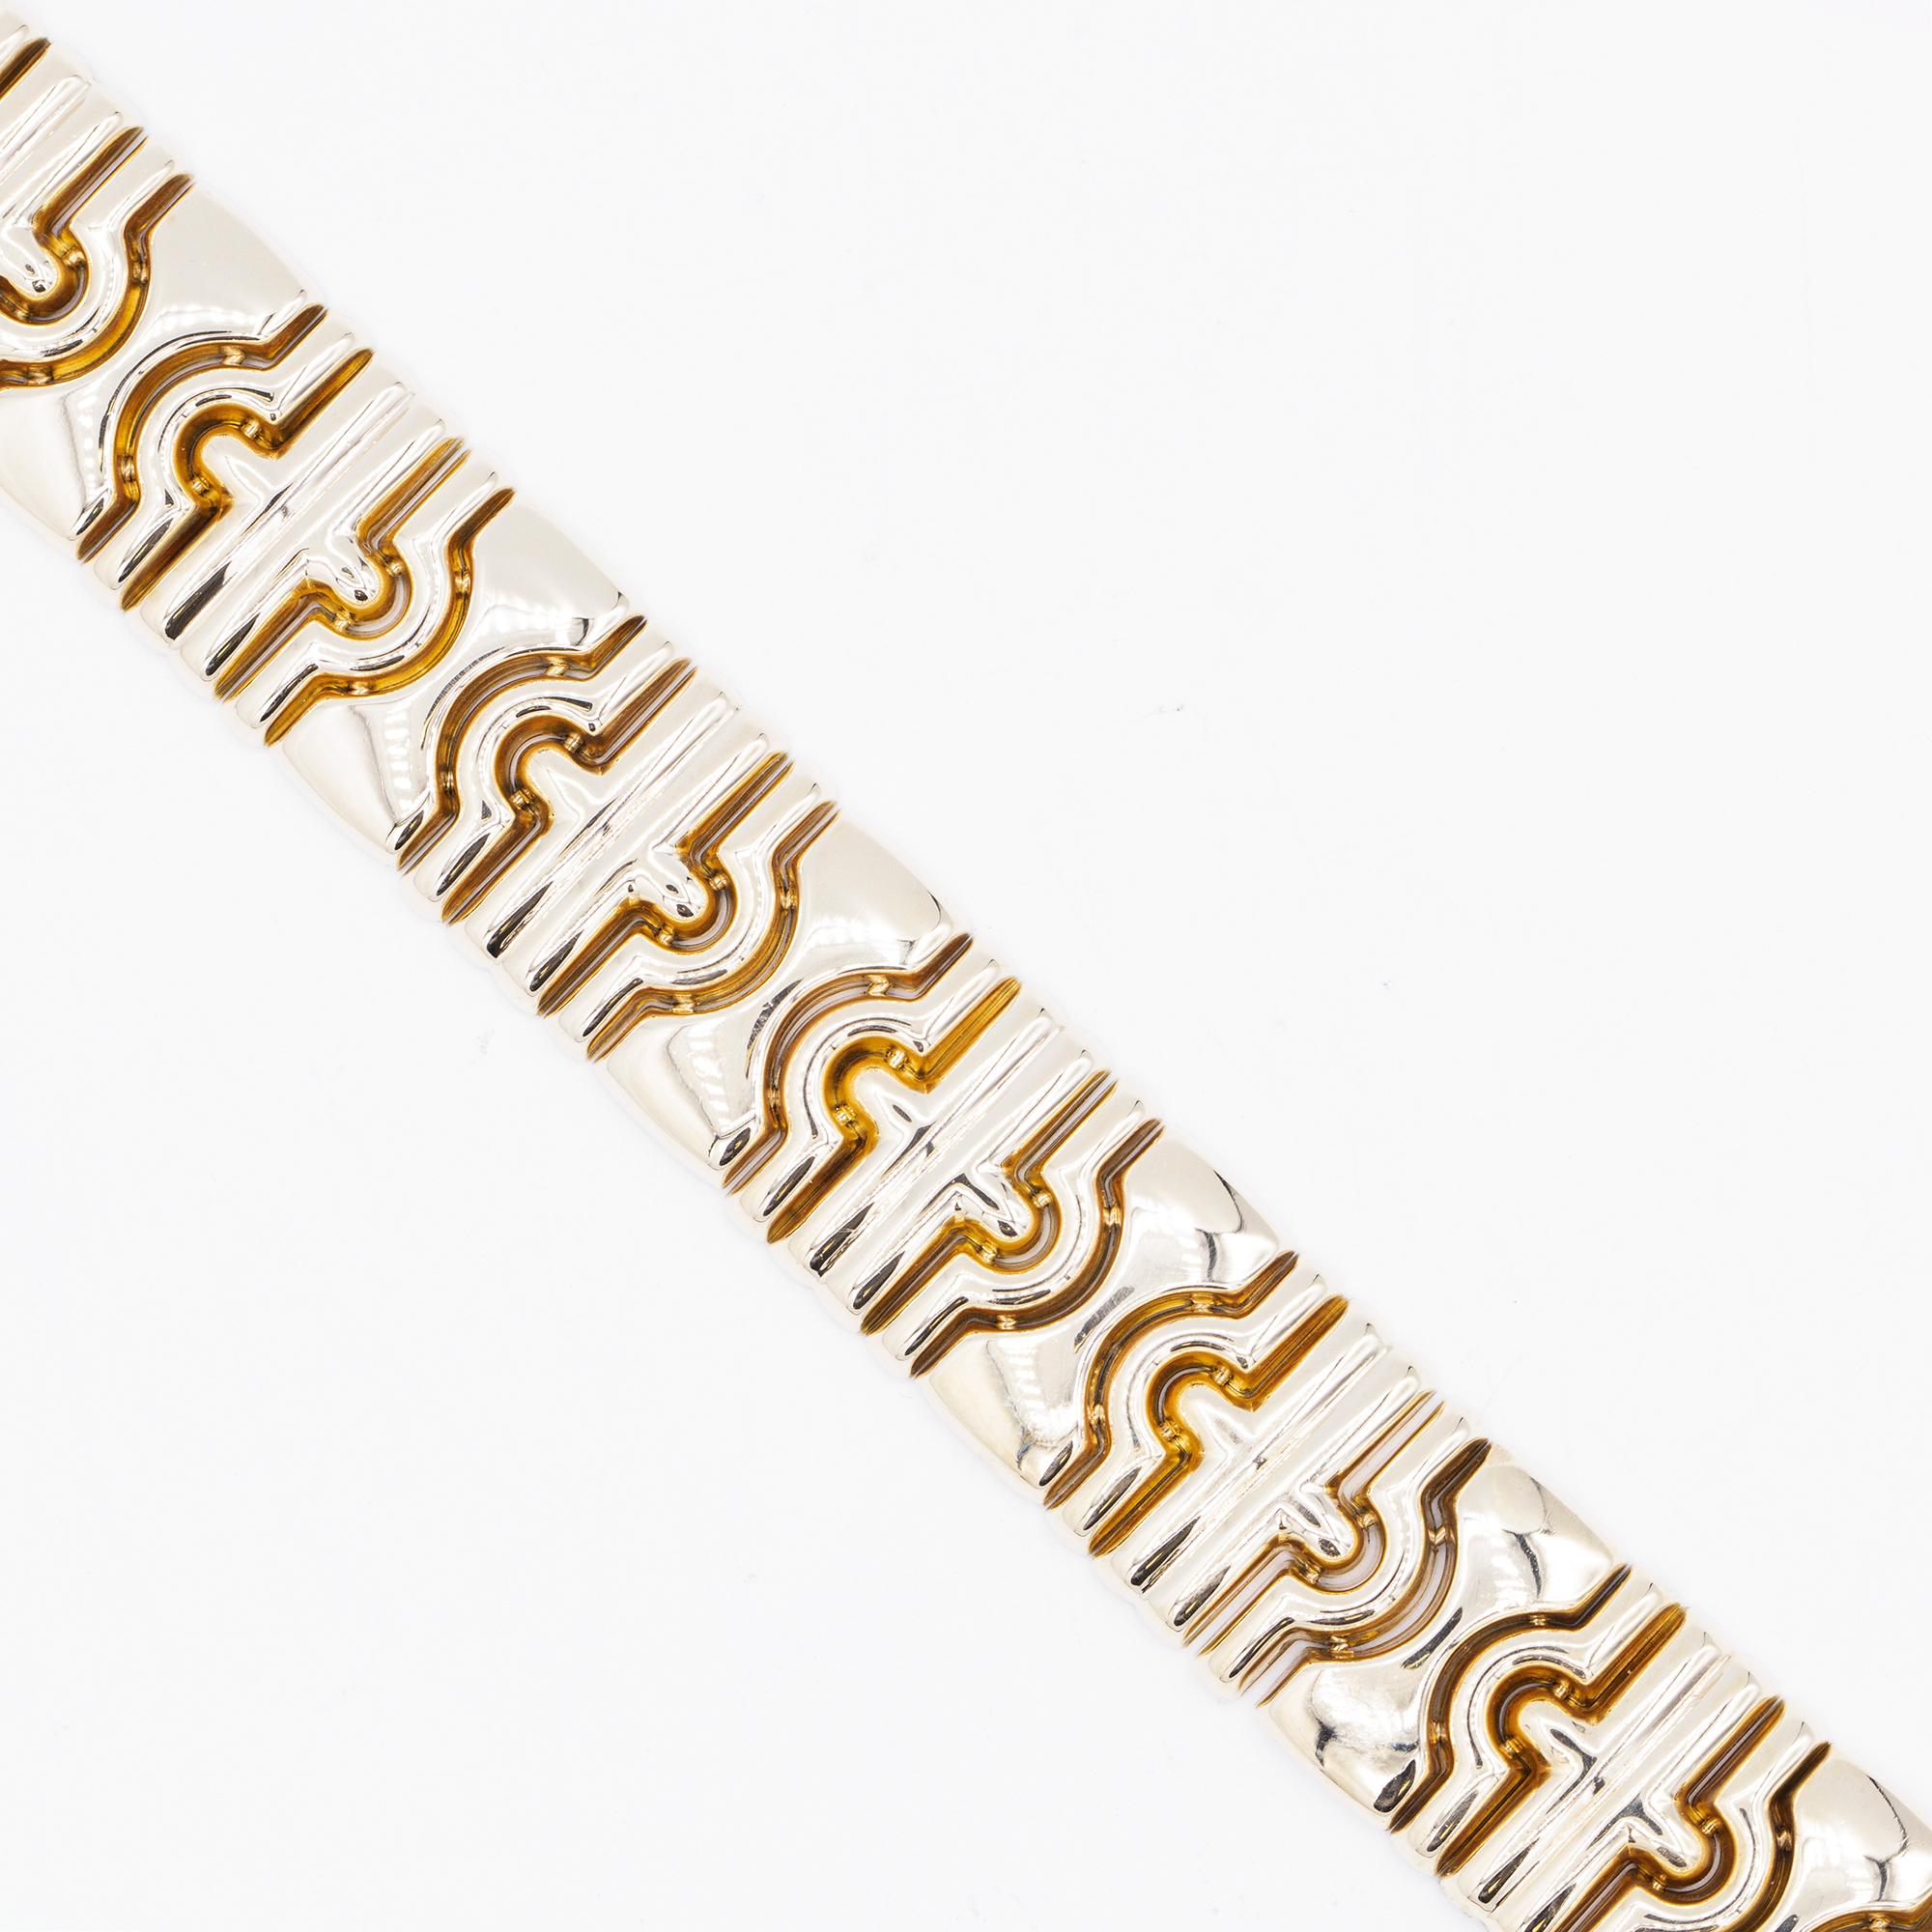 14 karat yellow gold Tubogas style bracelet wide format. The bracelet measures at 7.25